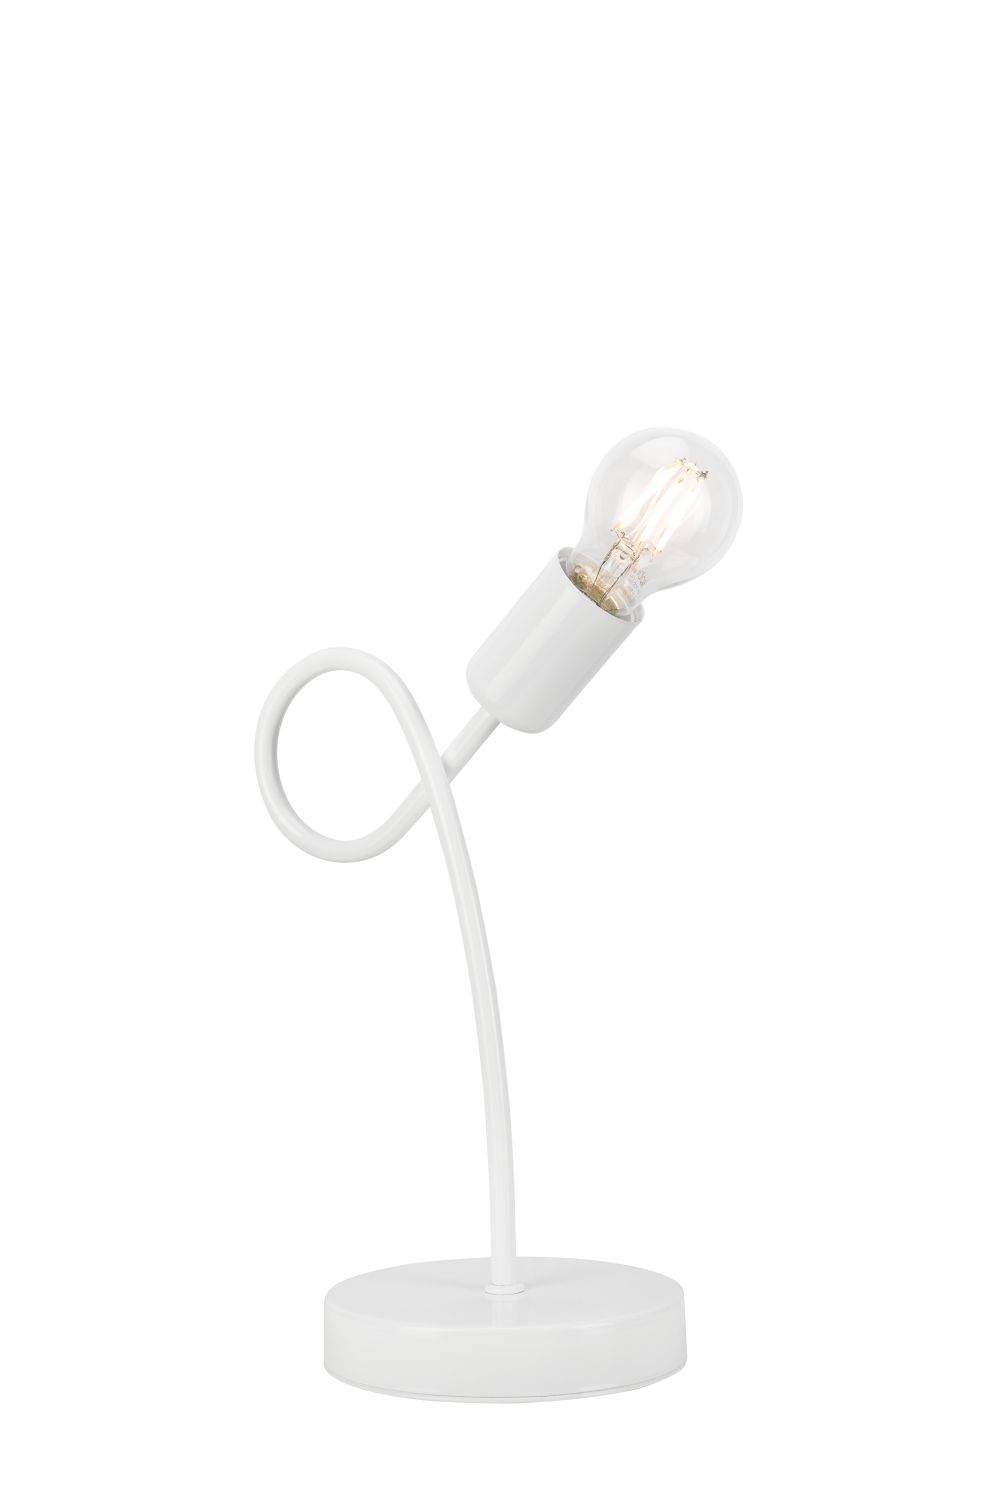 Tischlampe Metall Beleuchtung Weiß Modern H:32cm